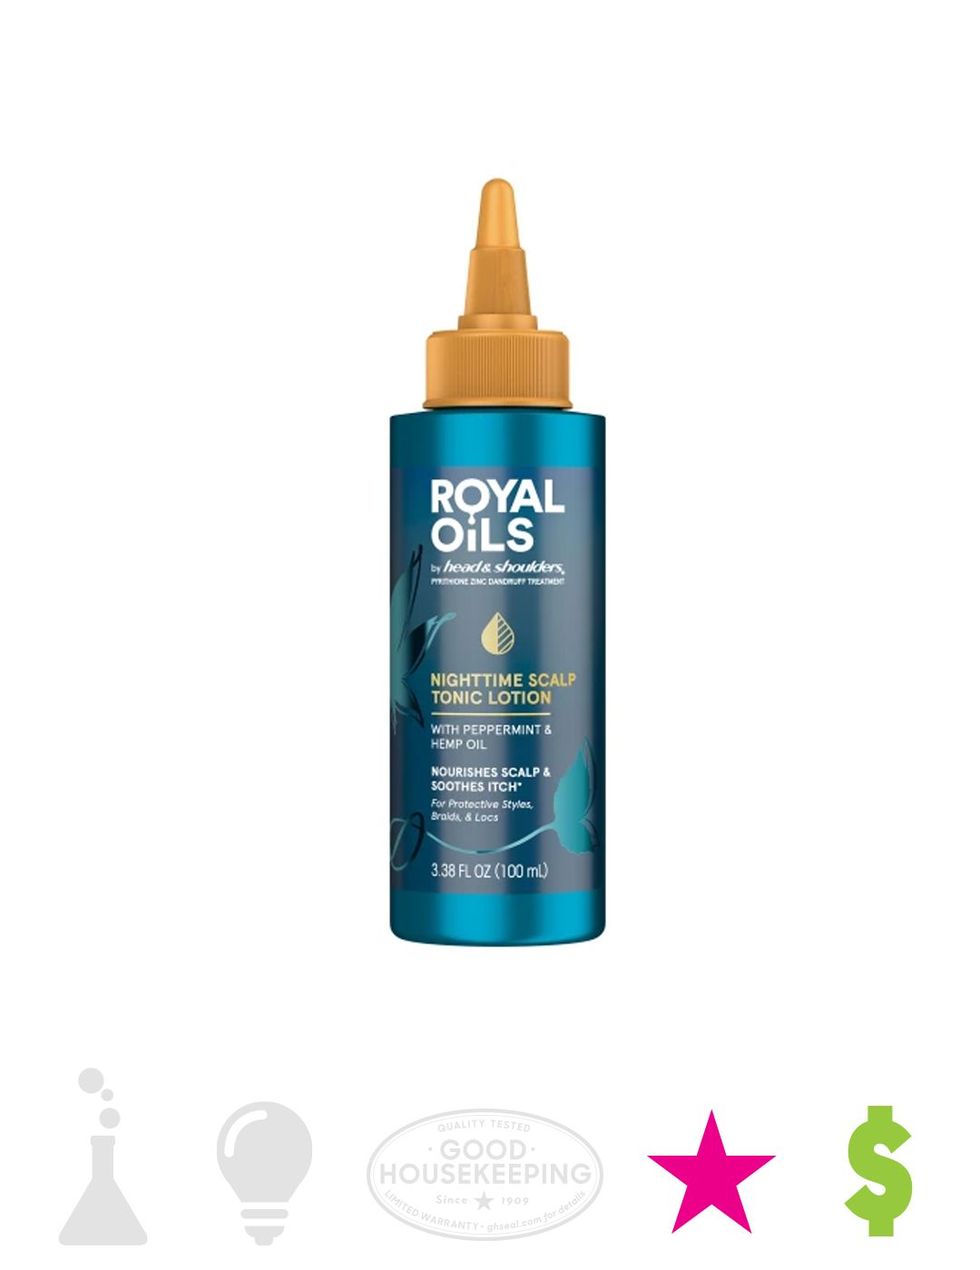 Royal Oils Nighttime Scalp Tonic Lotion